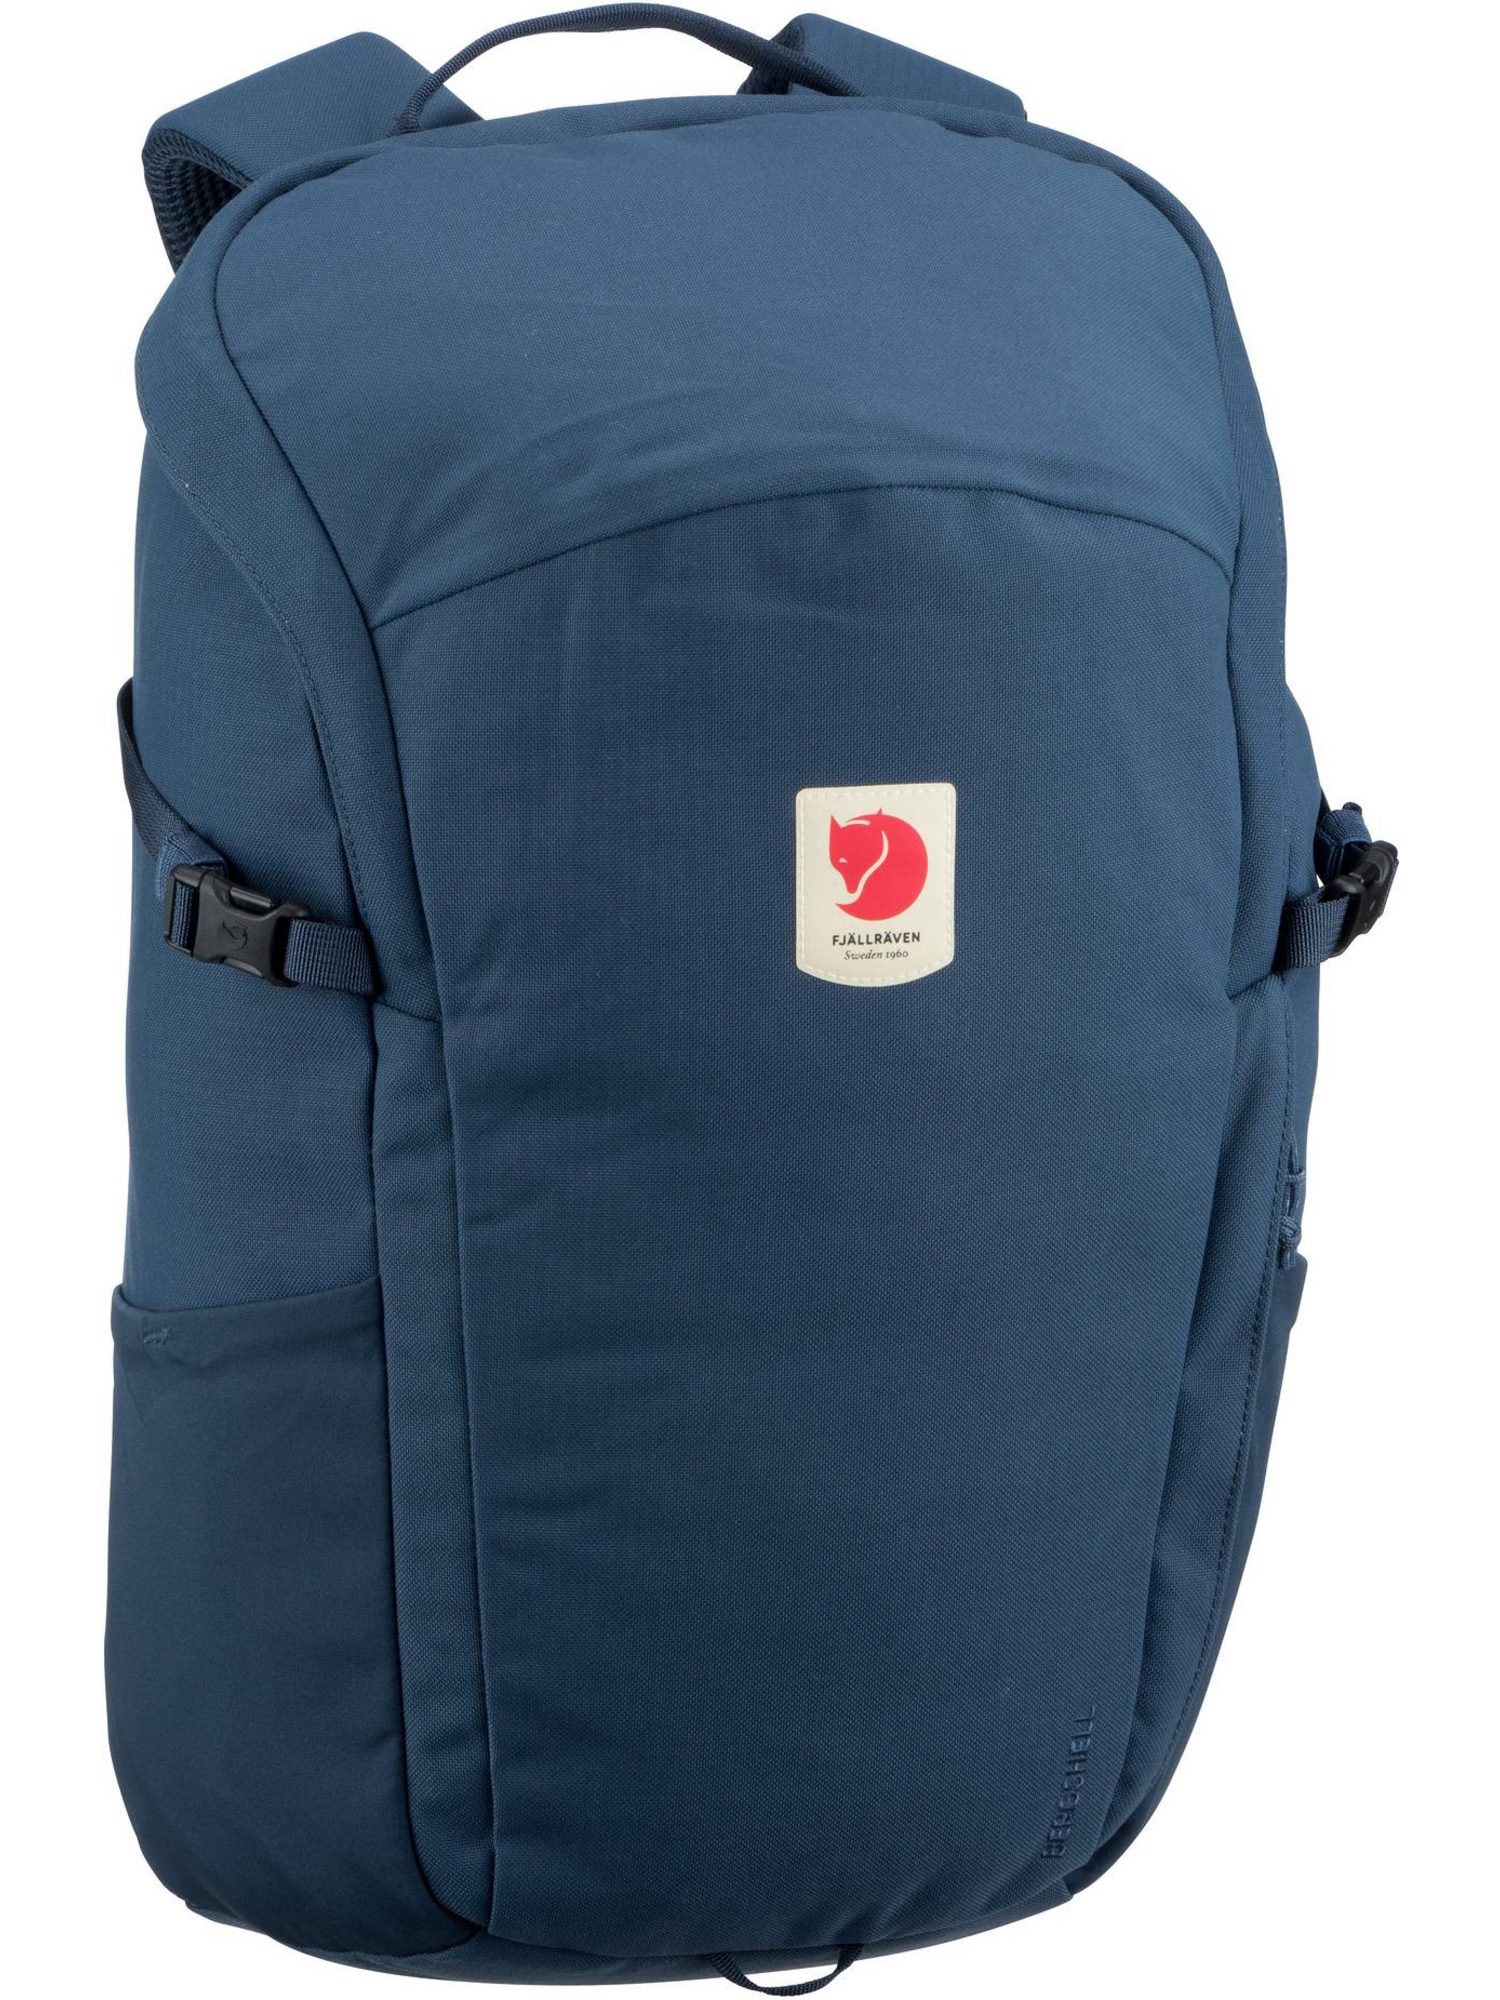 Рюкзак FJÄLLRÄVEN/Backpack Ulvö 23, цвет Mountain Blue сумка рюкзак ulvö среднего размера fjällräven темно серый